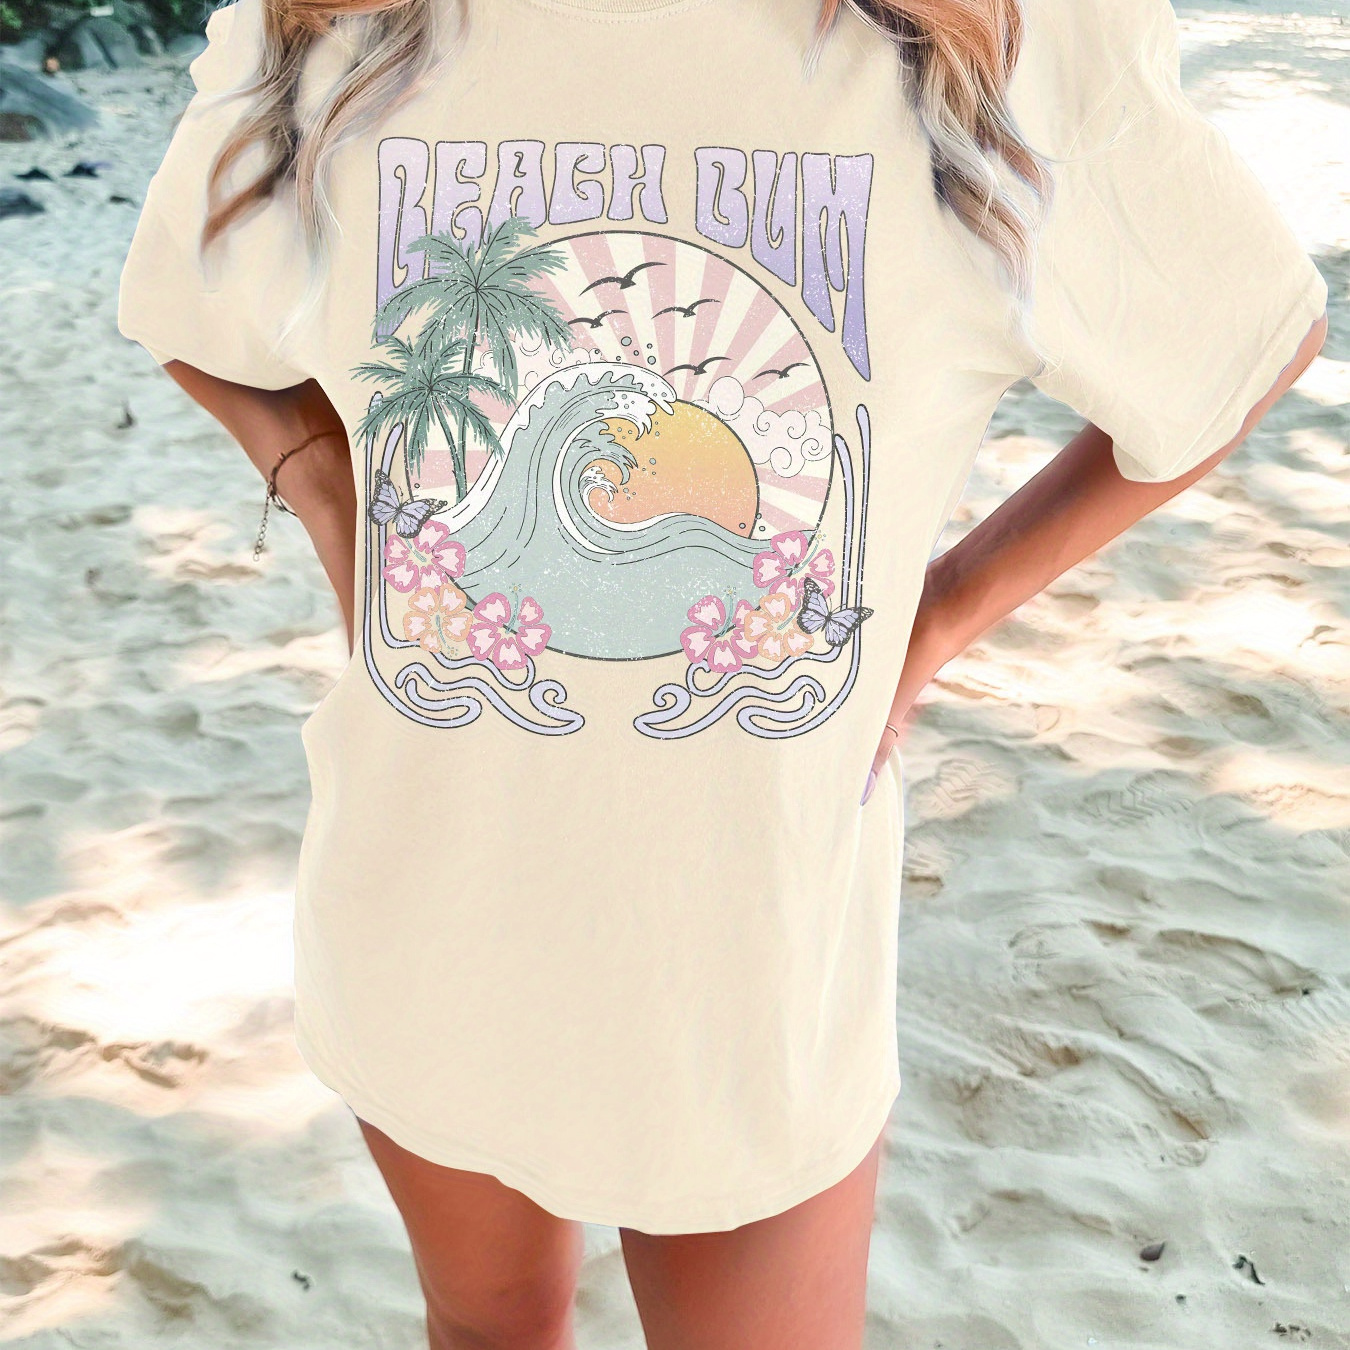 

Beach Bum Print T-shirt, Short Sleeve Crew Neck Casual Top For Summer & Spring, Women's Clothing